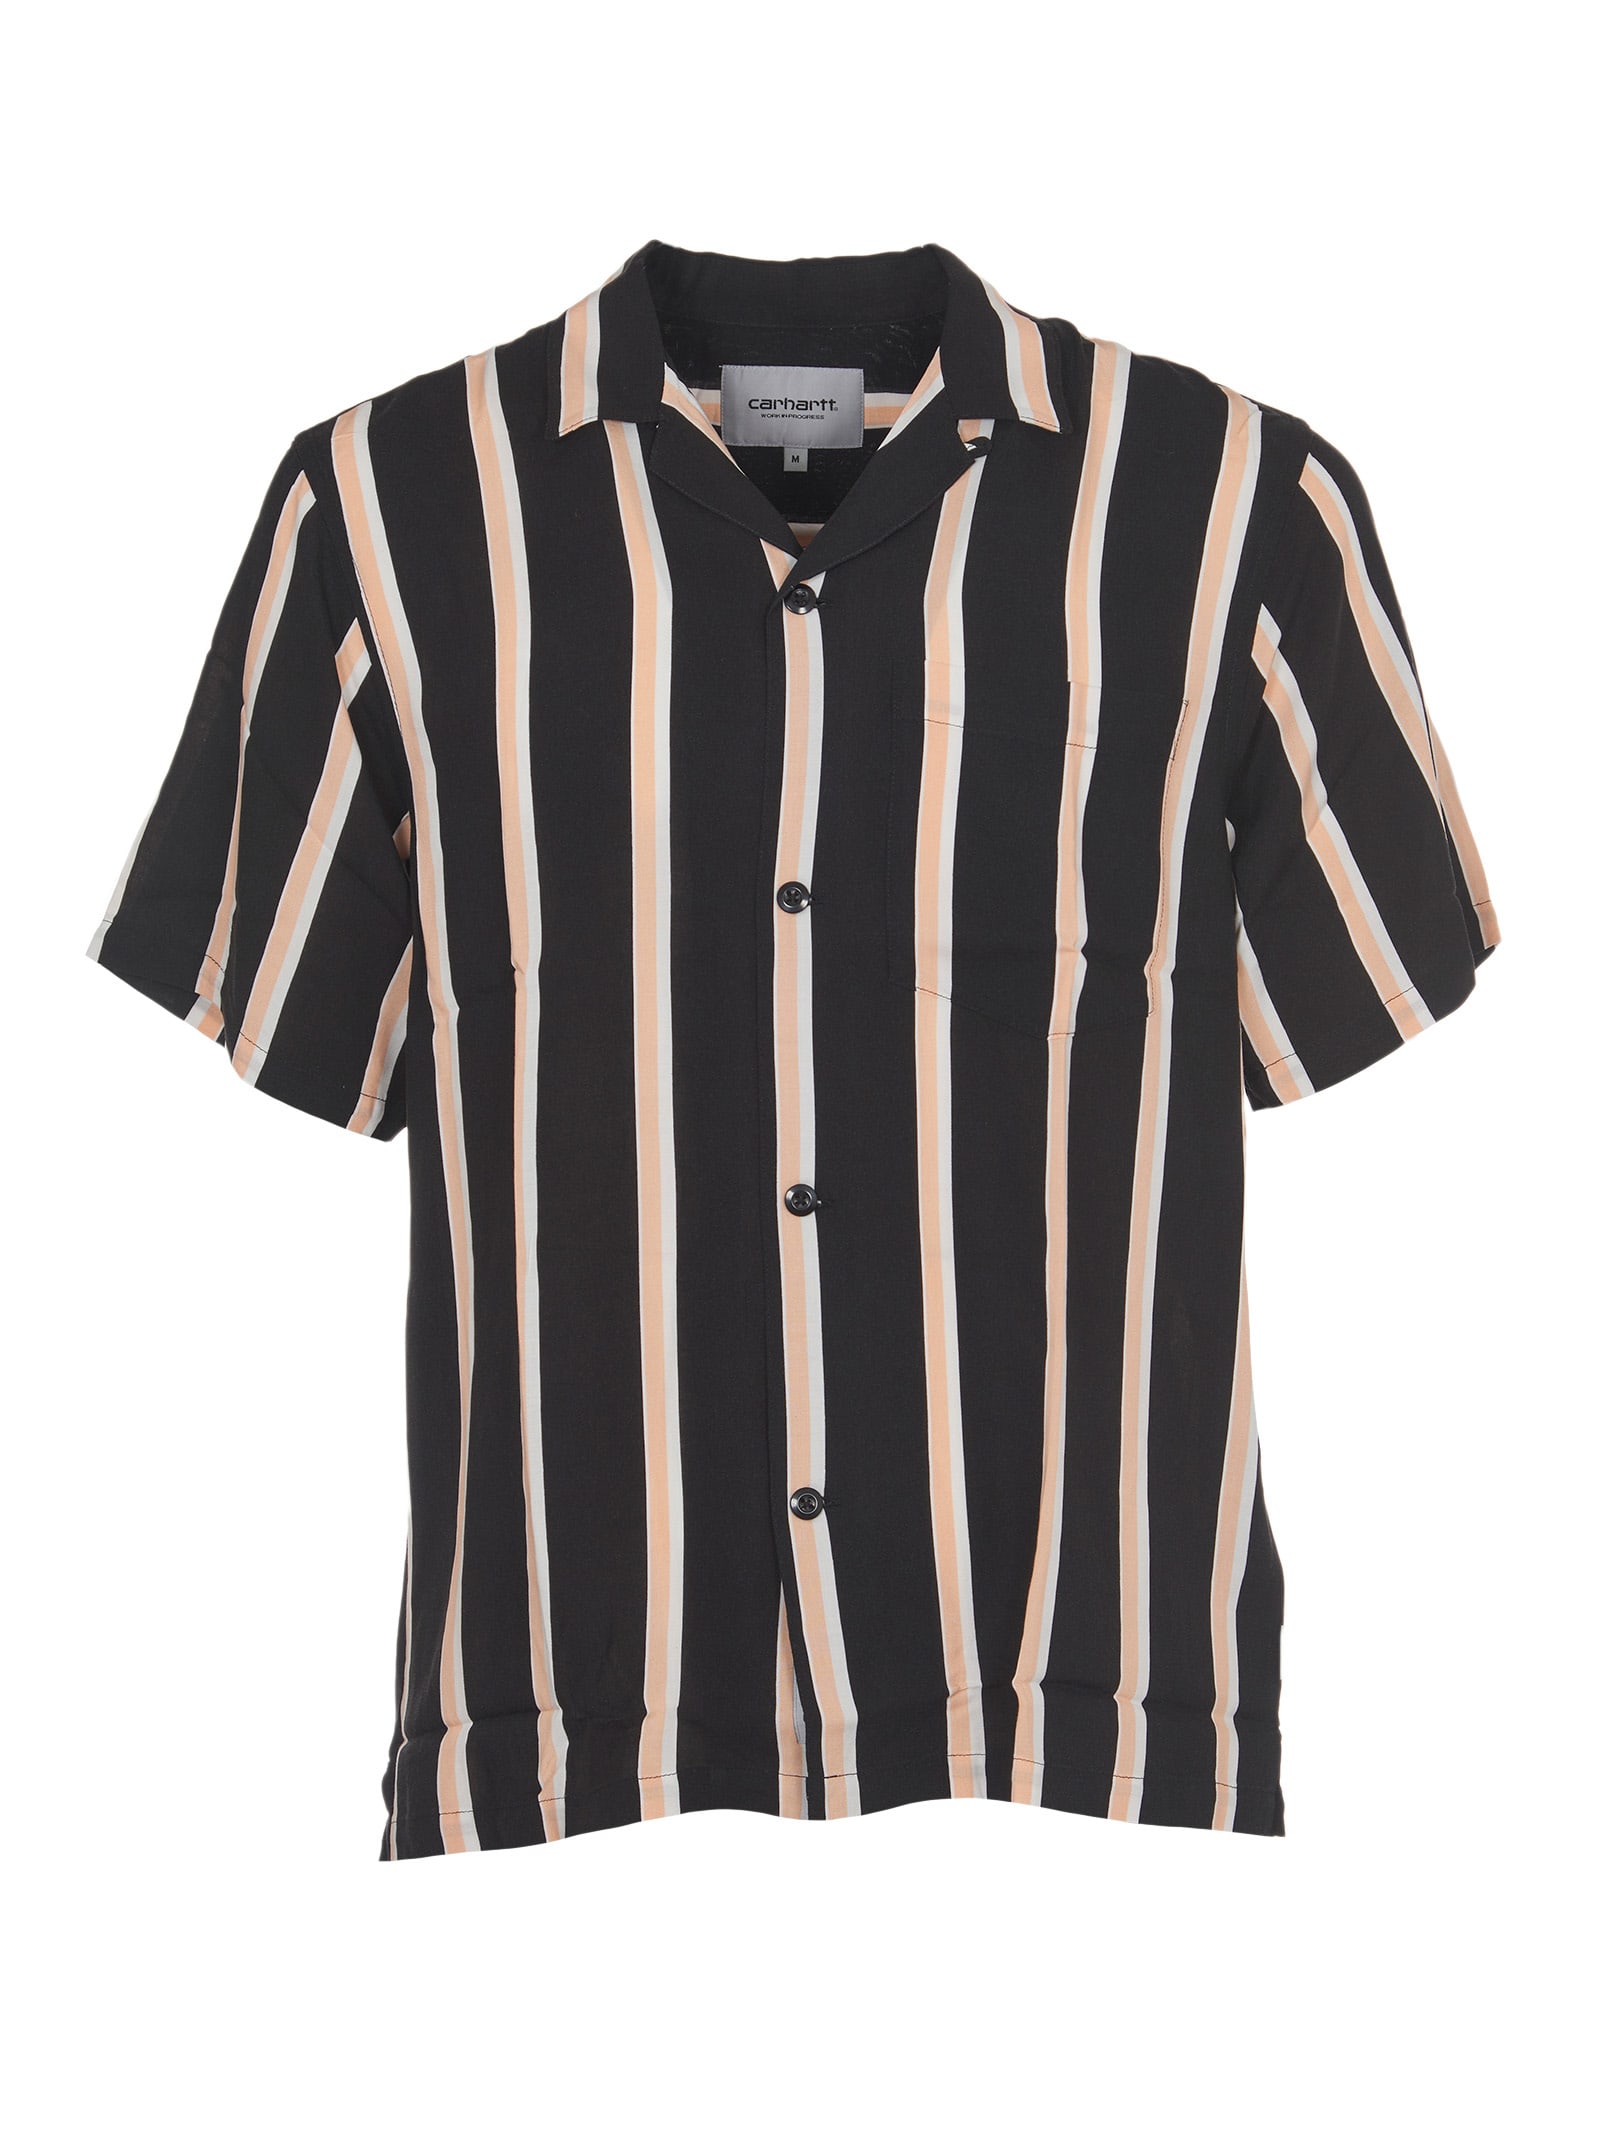 Carhartt Stripe Bowling Shirt